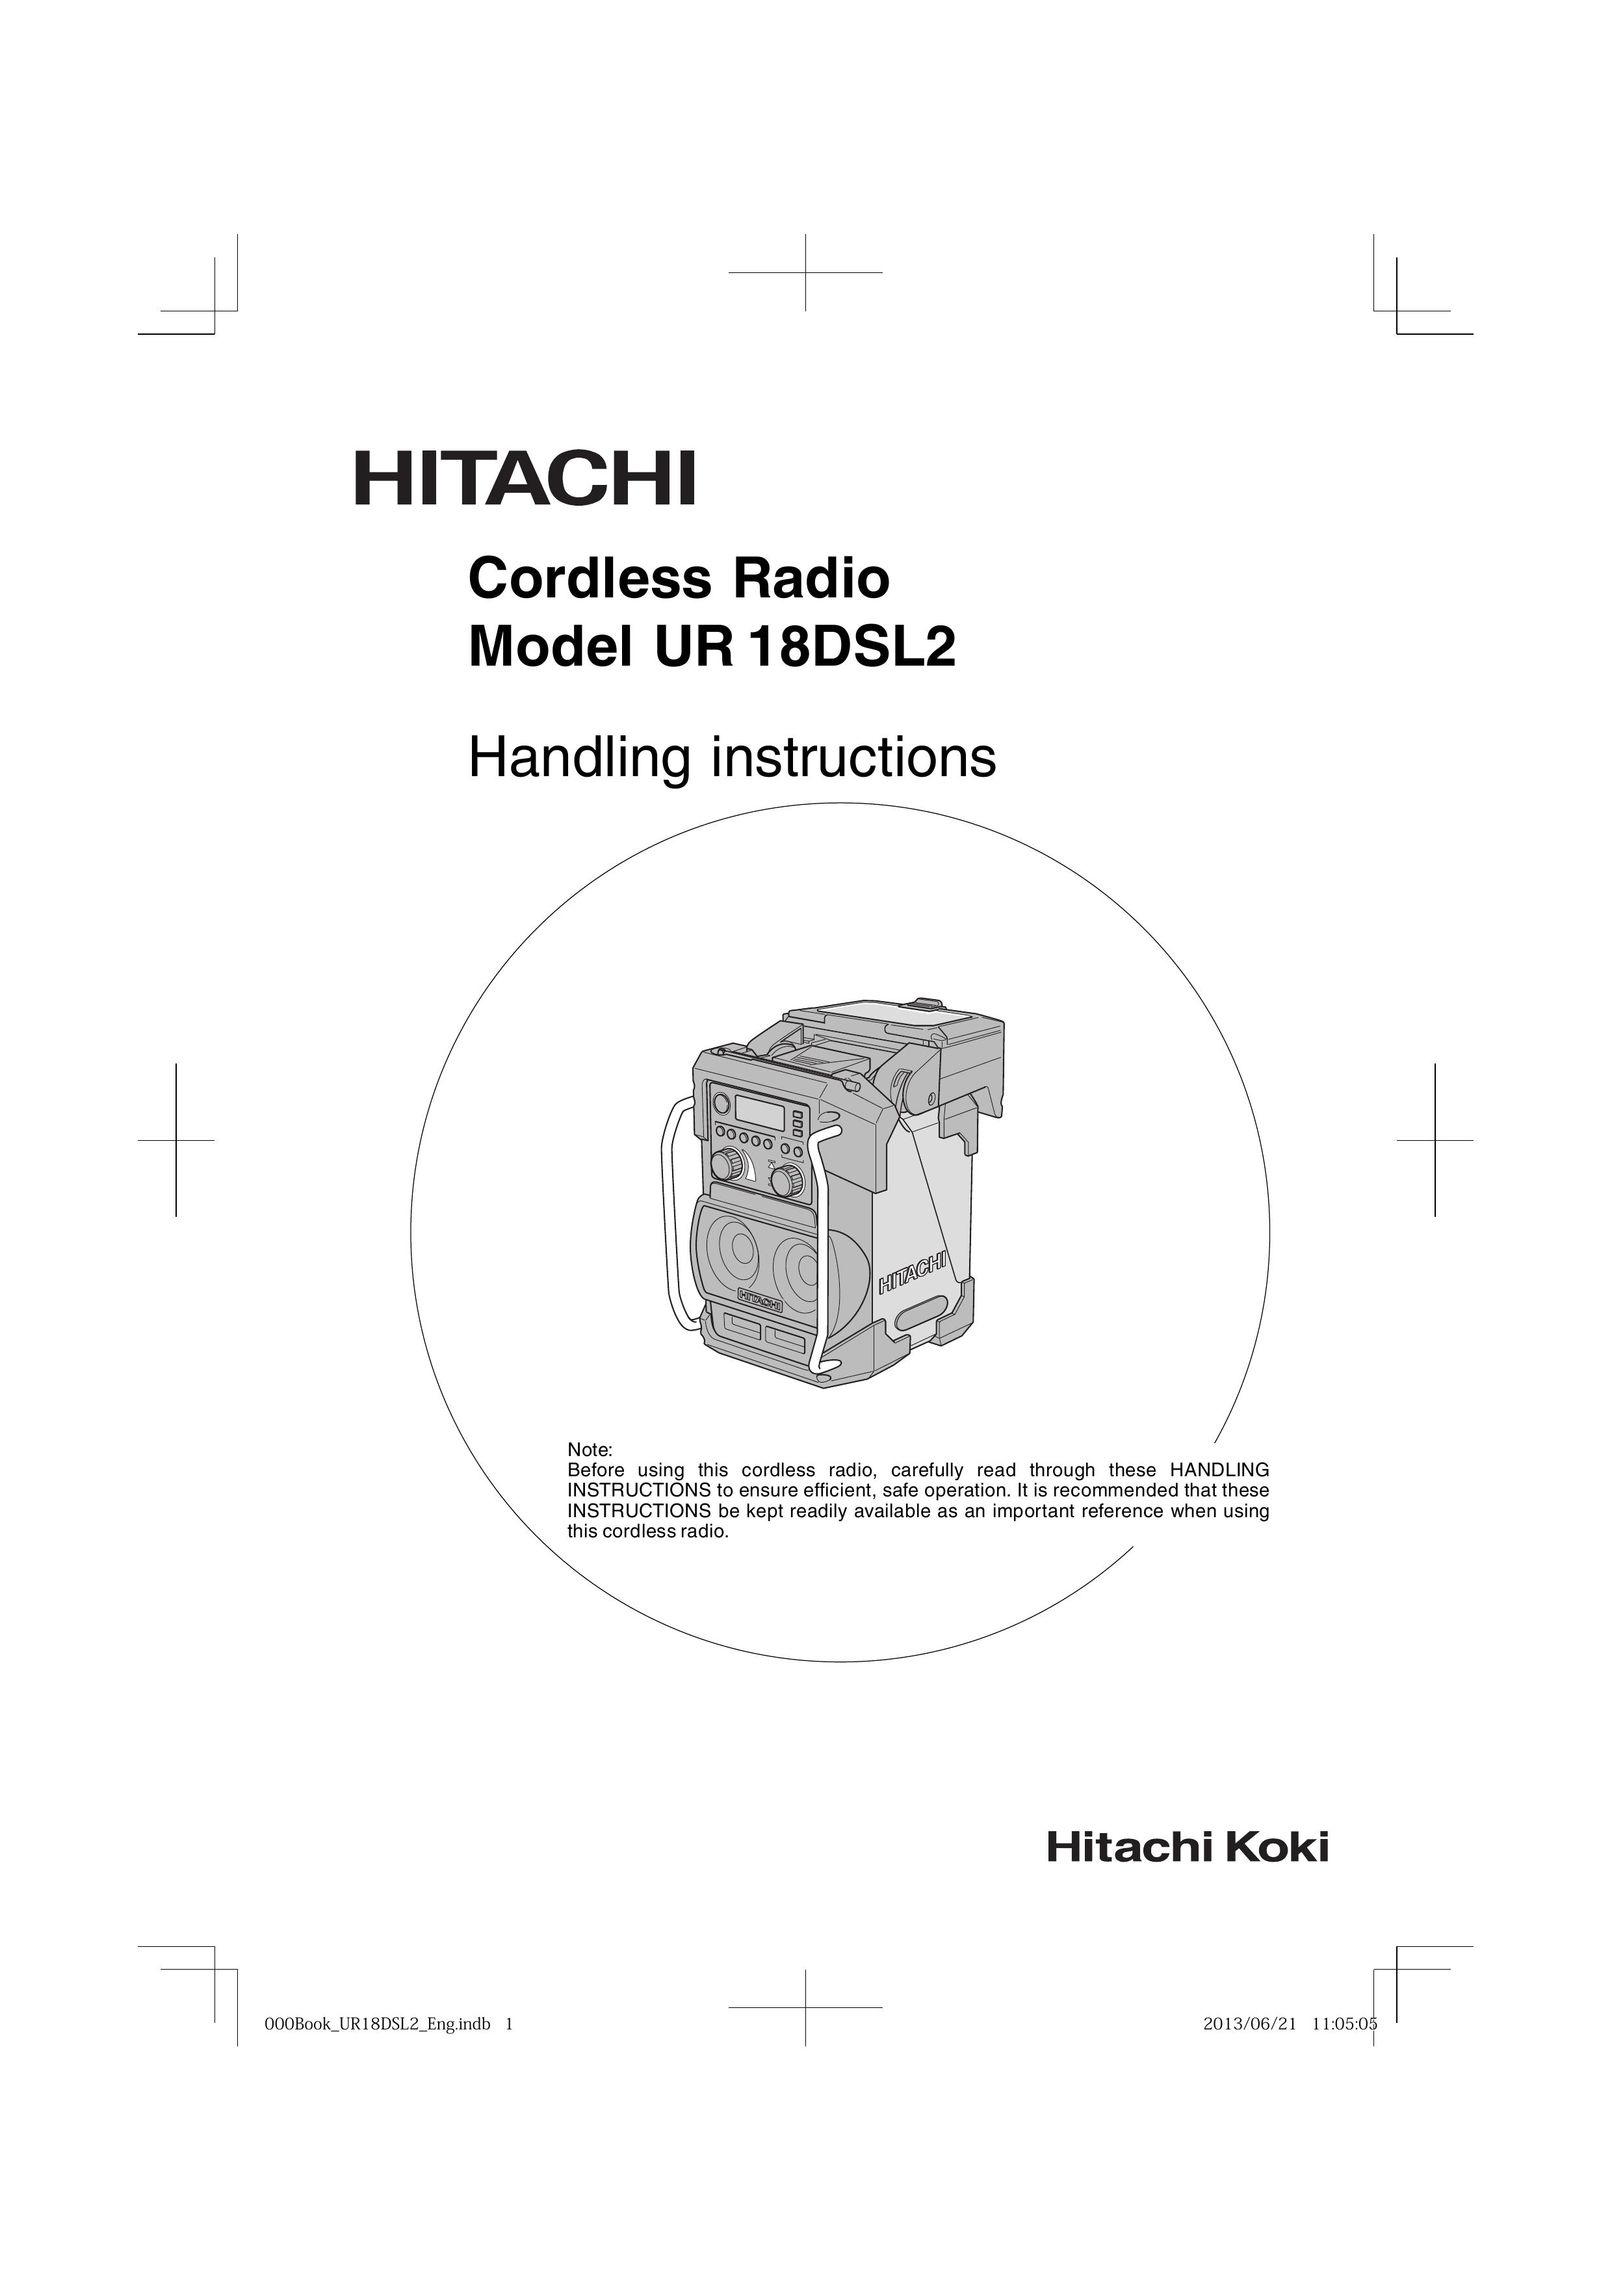 Hitachi Koki USA UR 18DSL2 Portable Radio User Manual